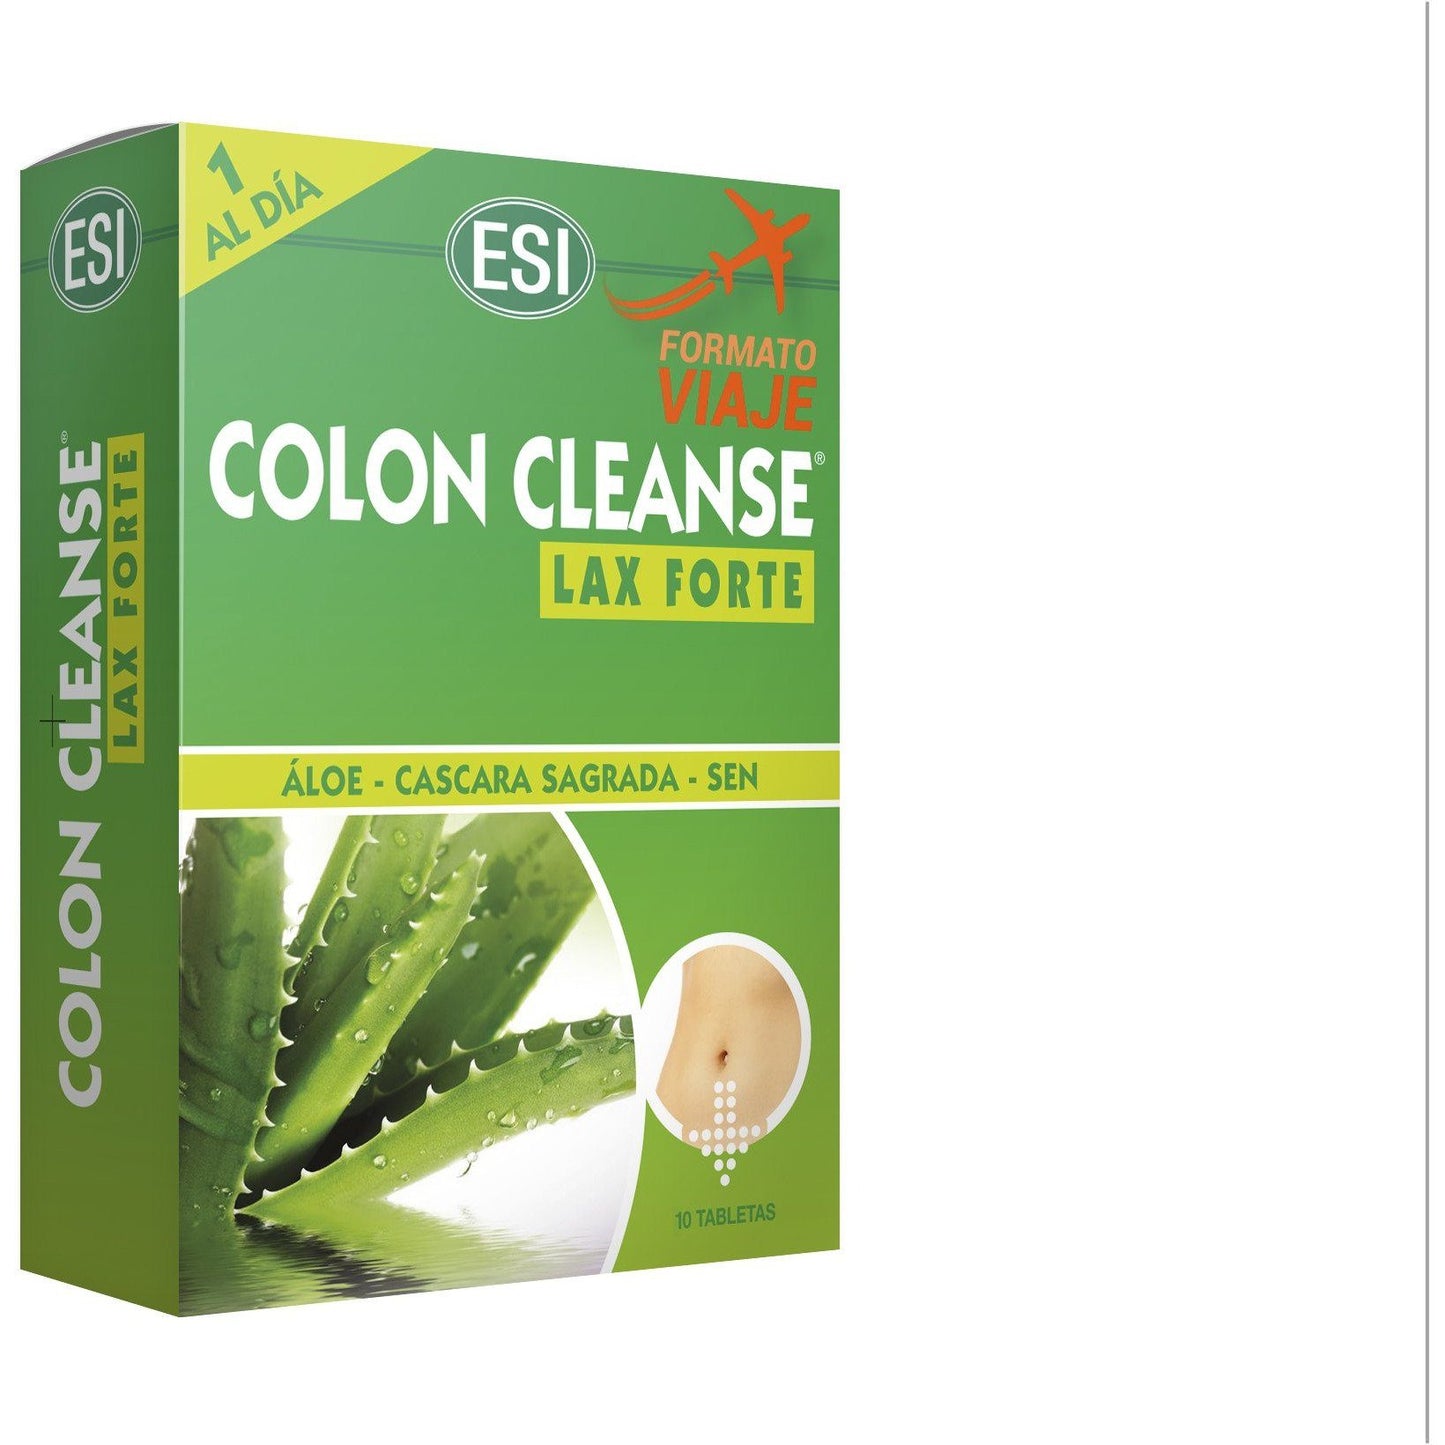 Colon Cleanse Lax Forte Viaje 15 Tabletas | Trepat Diet - Dietetica Ferrer